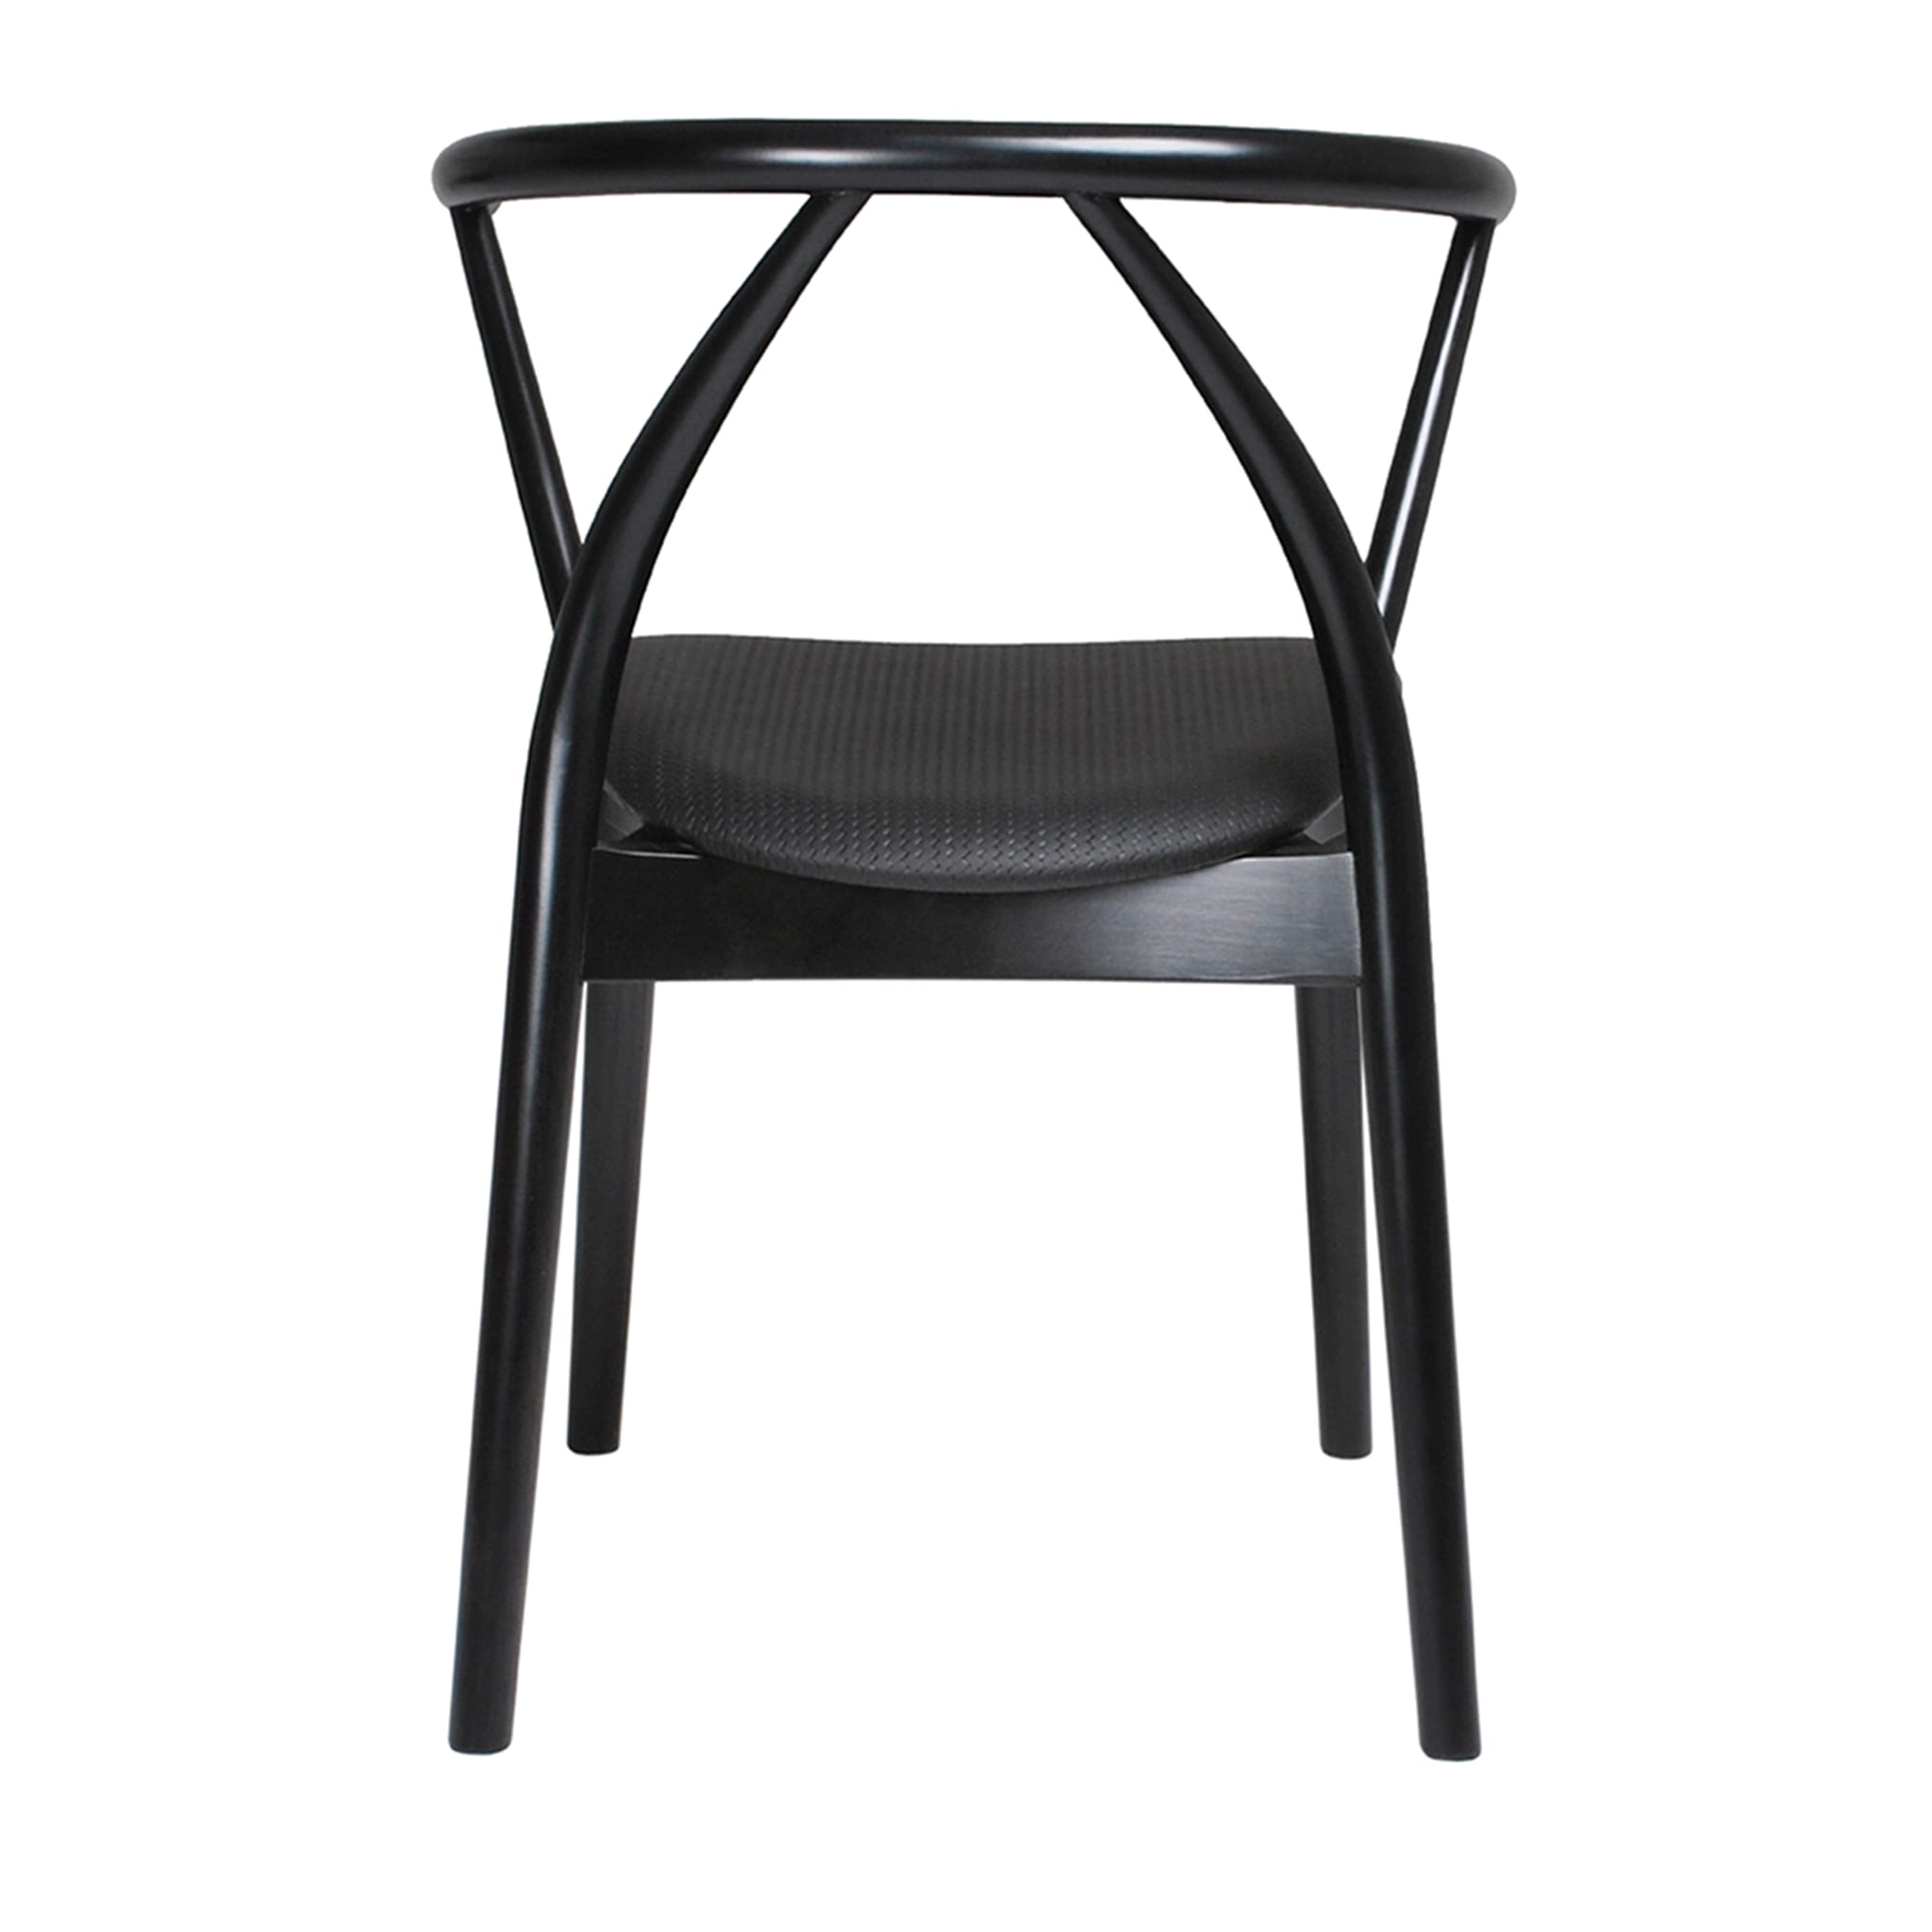 Yelly 970 Black Chair by Markus Johansson - Alternative view 1